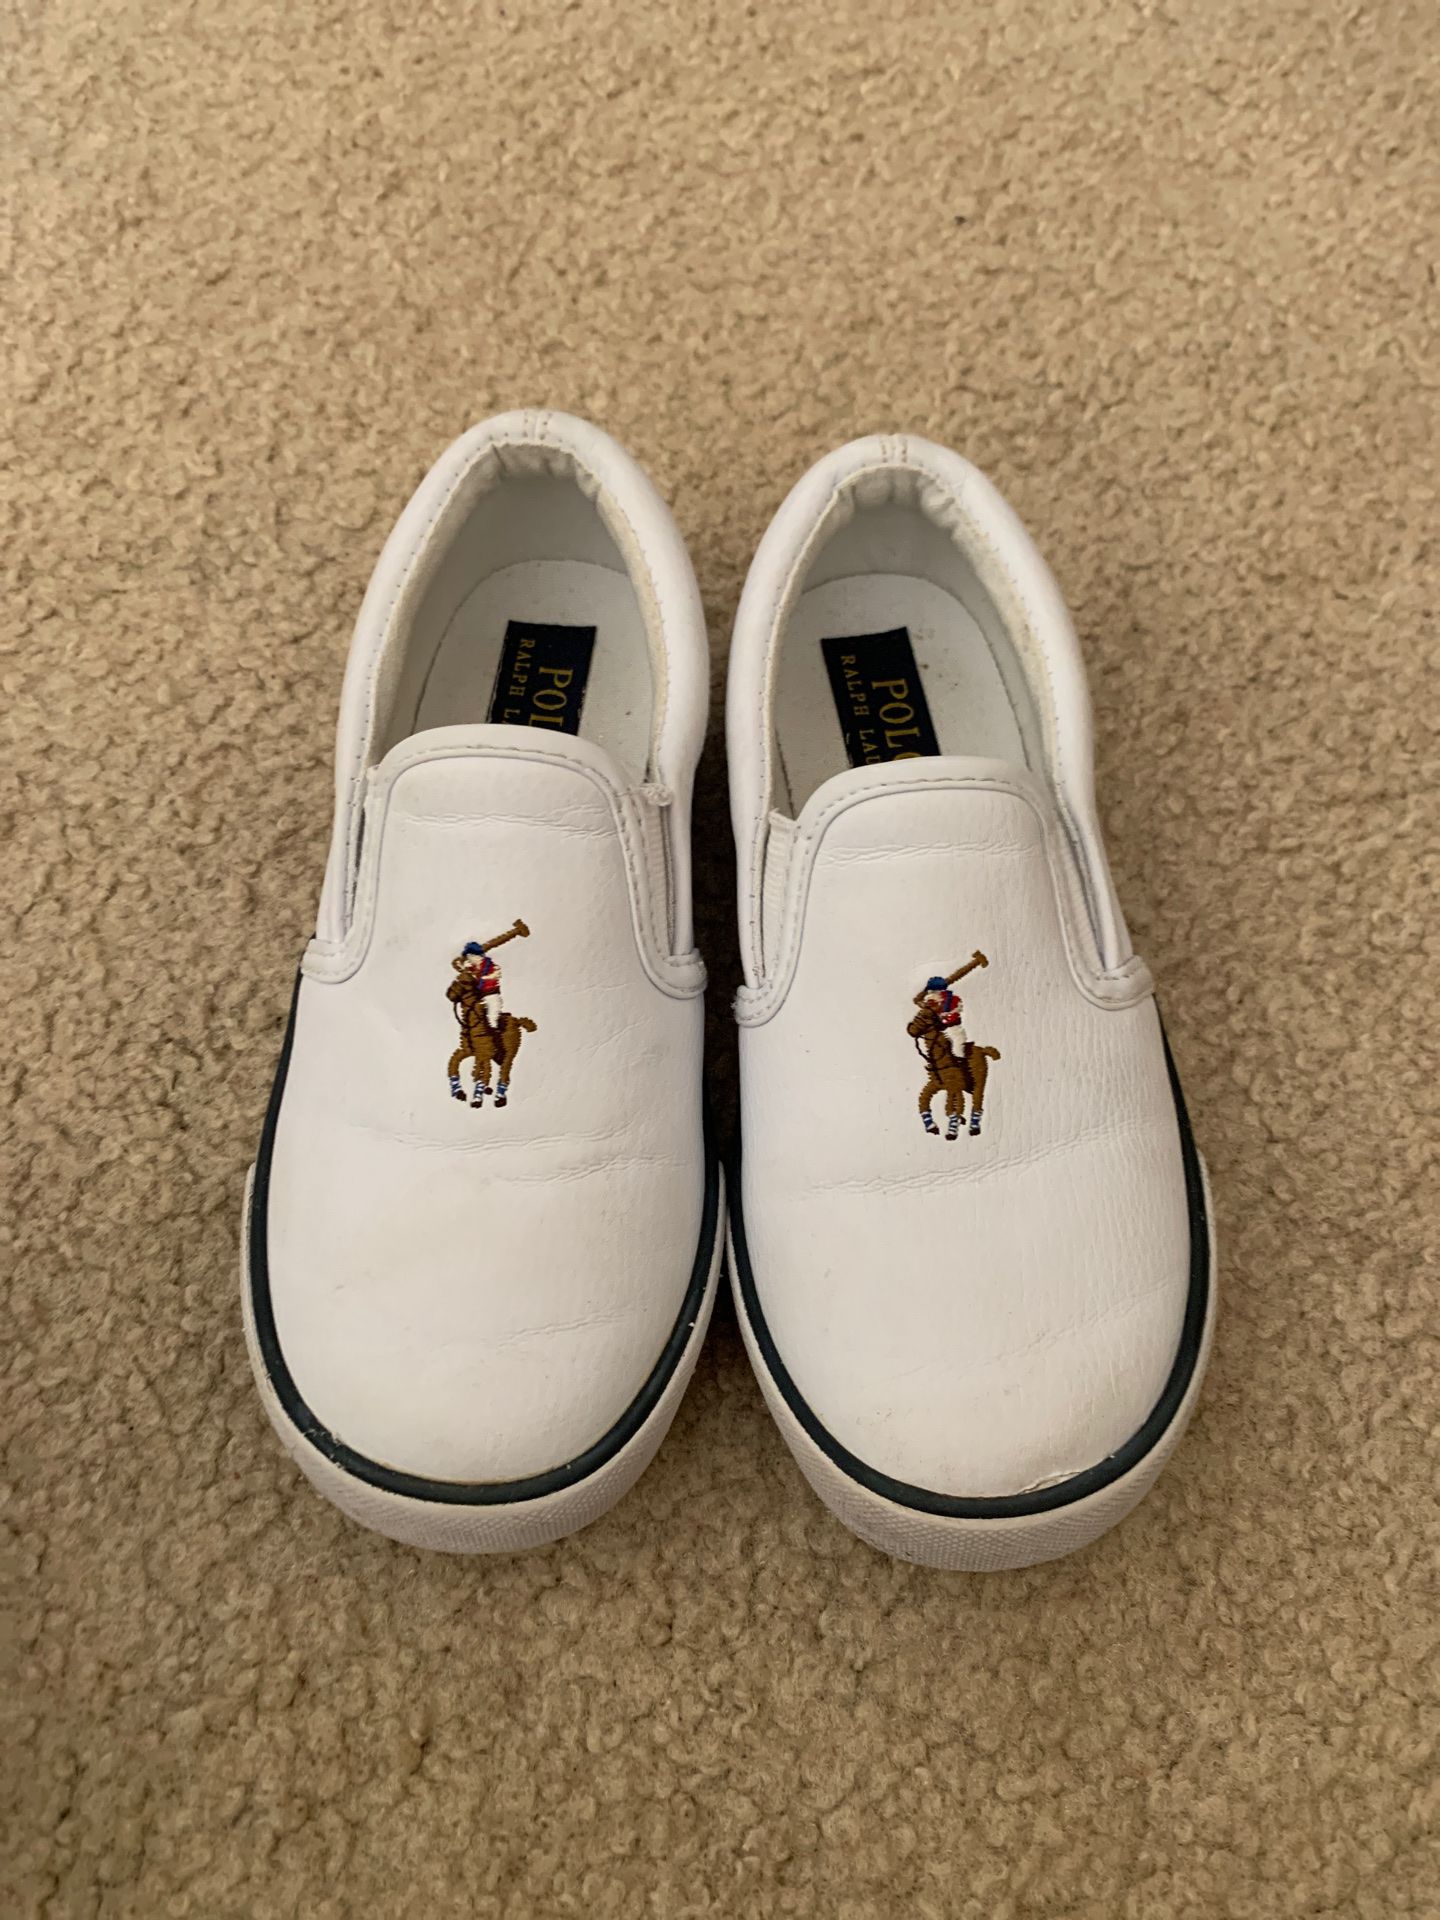 Toddler boys Ralph Lauren Polo shoes Size 12